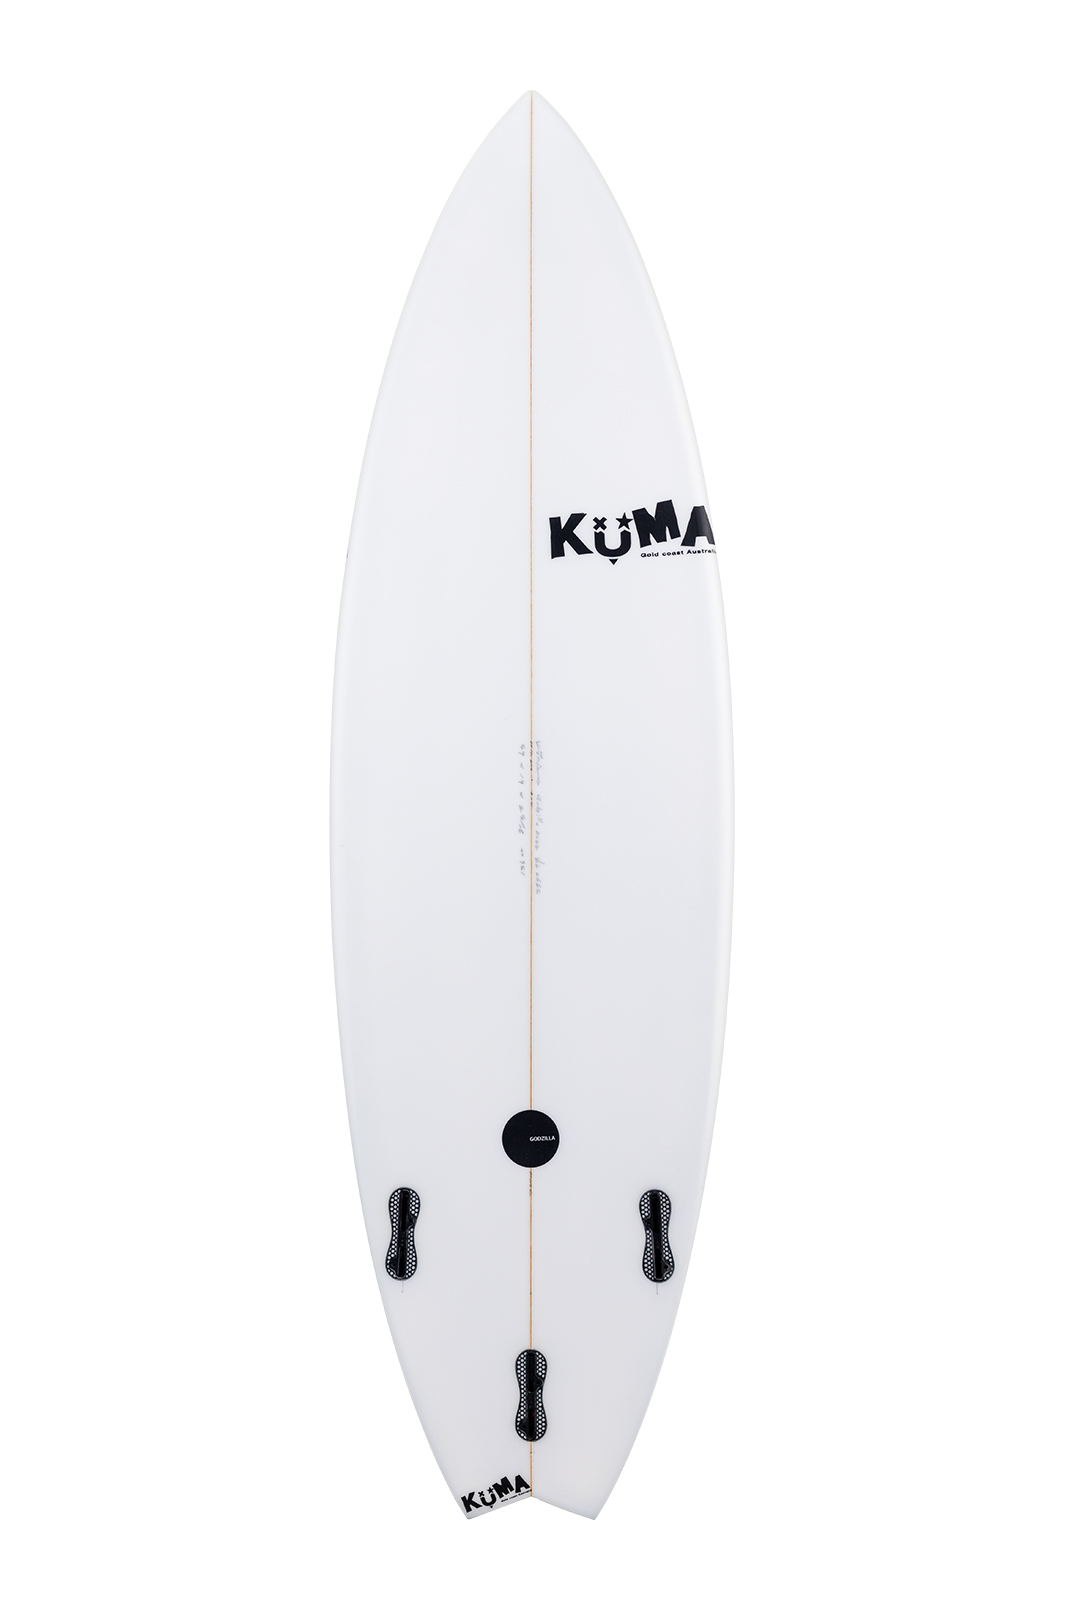 Godzilla - Kuma surfboards クマサーフボード